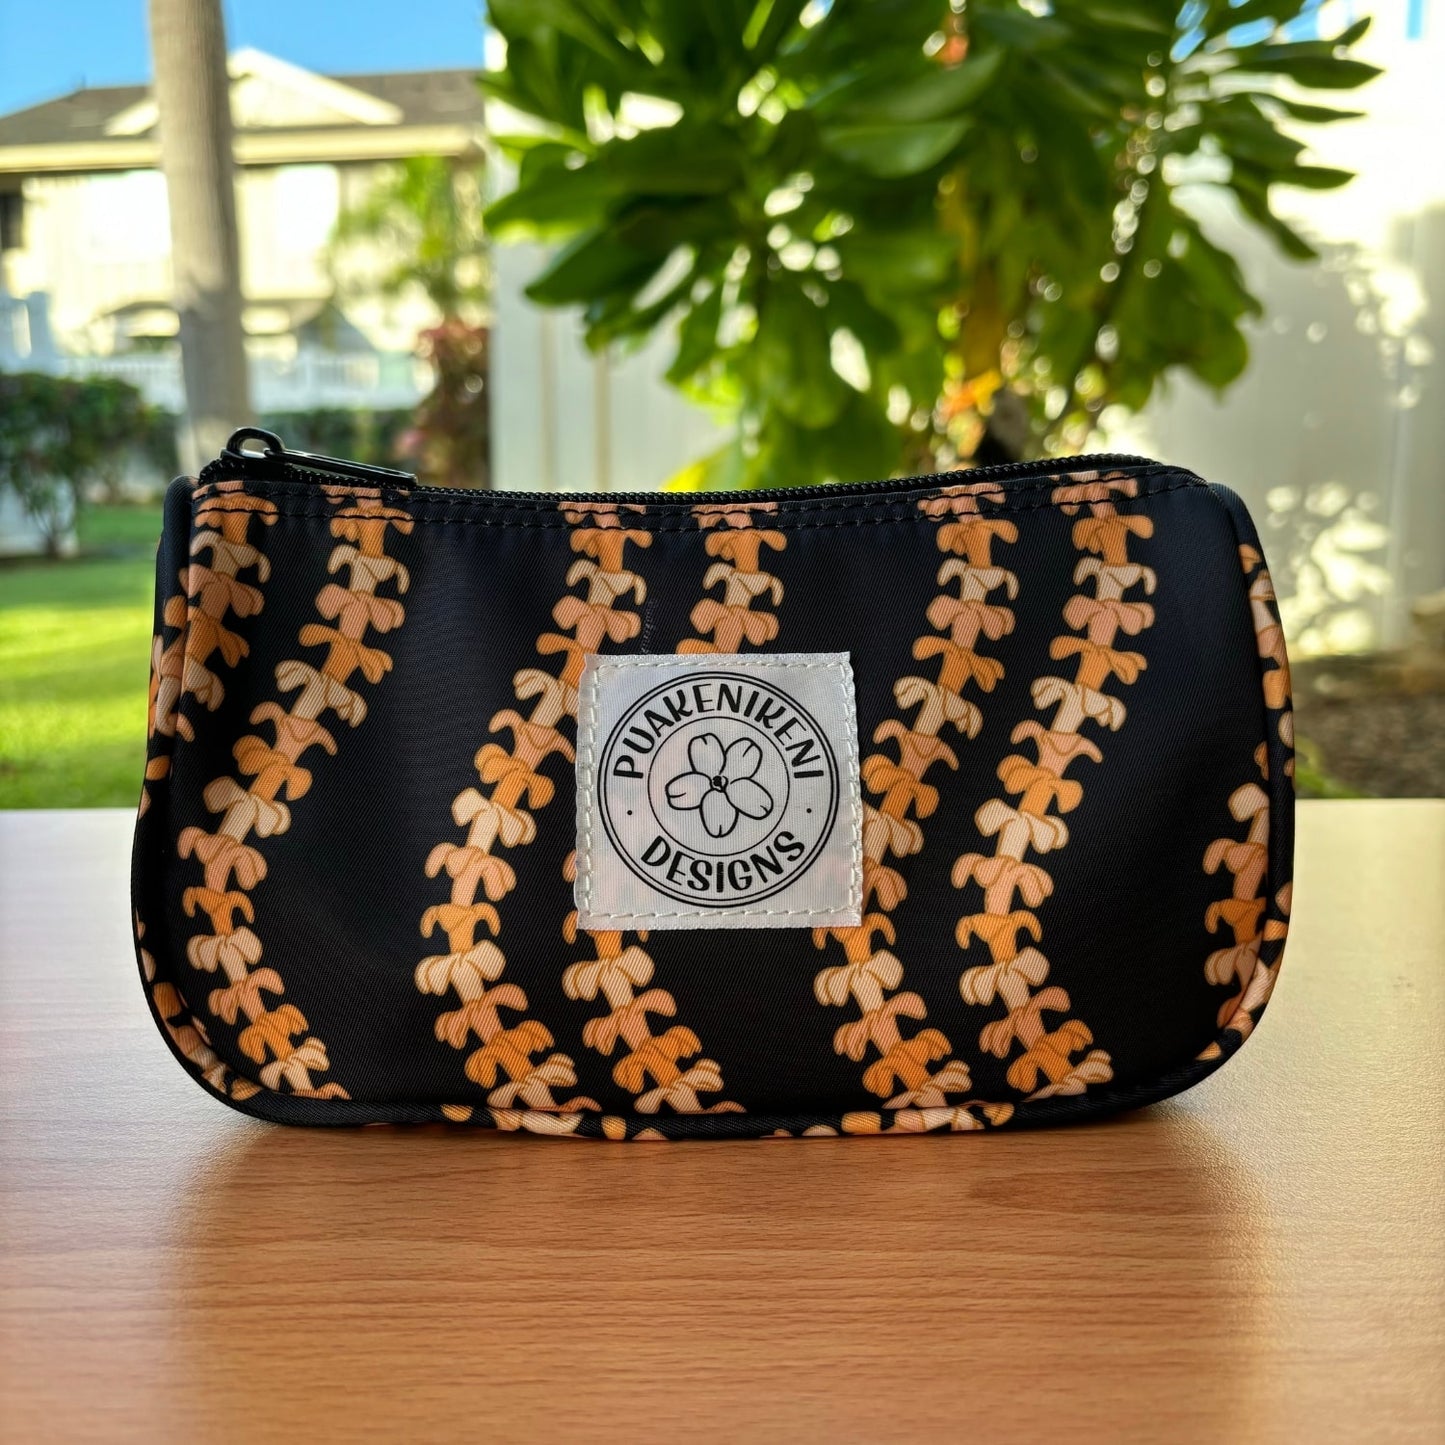 Mini Zipper Pouch - make-up bag, clutch, wristlet, with puakenikeni lei design from Puakenikeni Designs front view